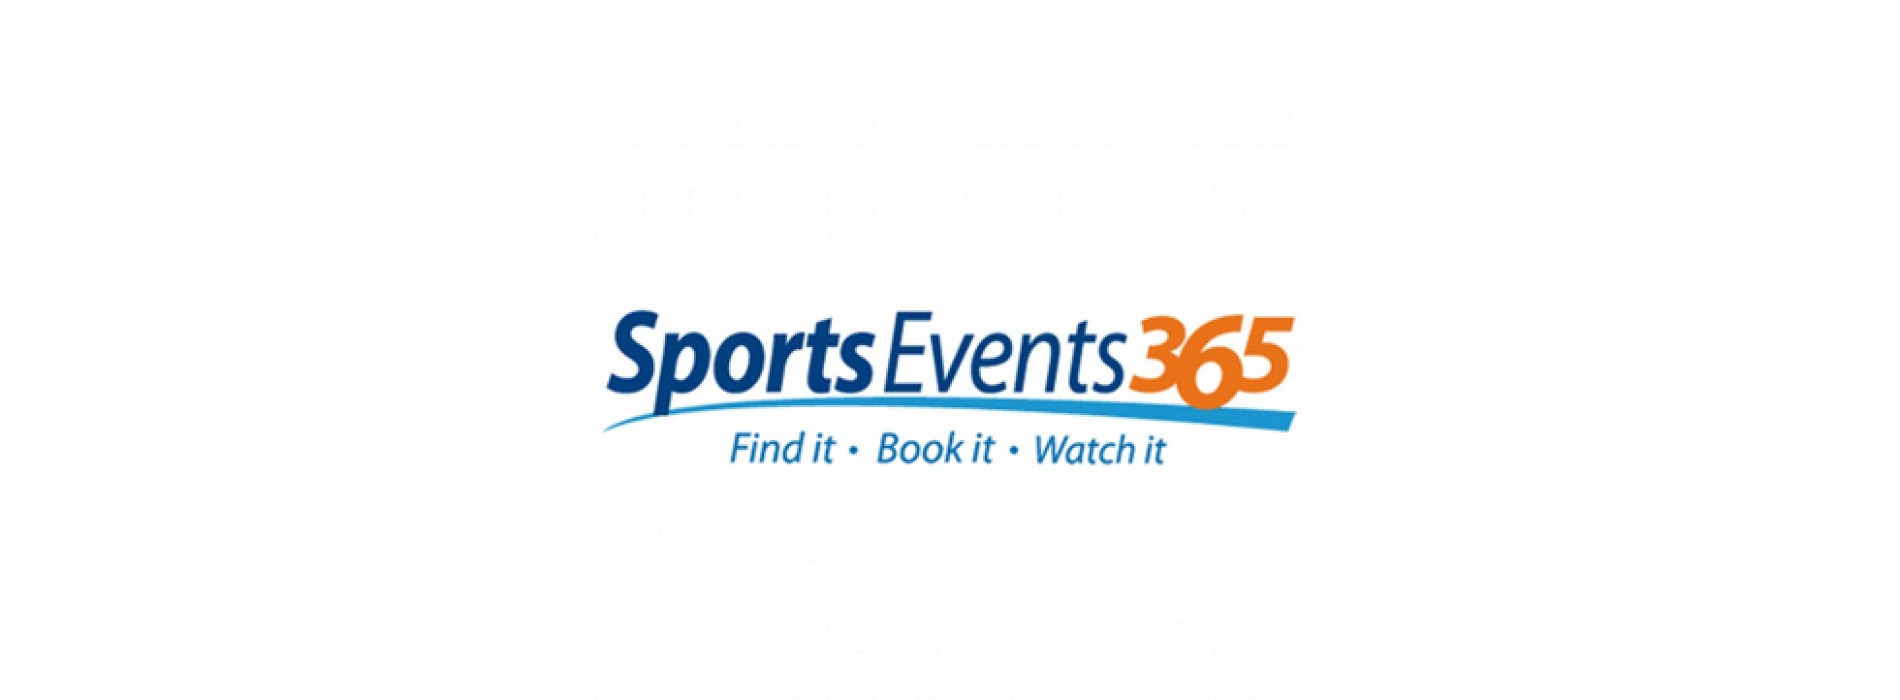 Sports Events 365 showcases B2B partnership portfolio for travel companies at FITUR 2018